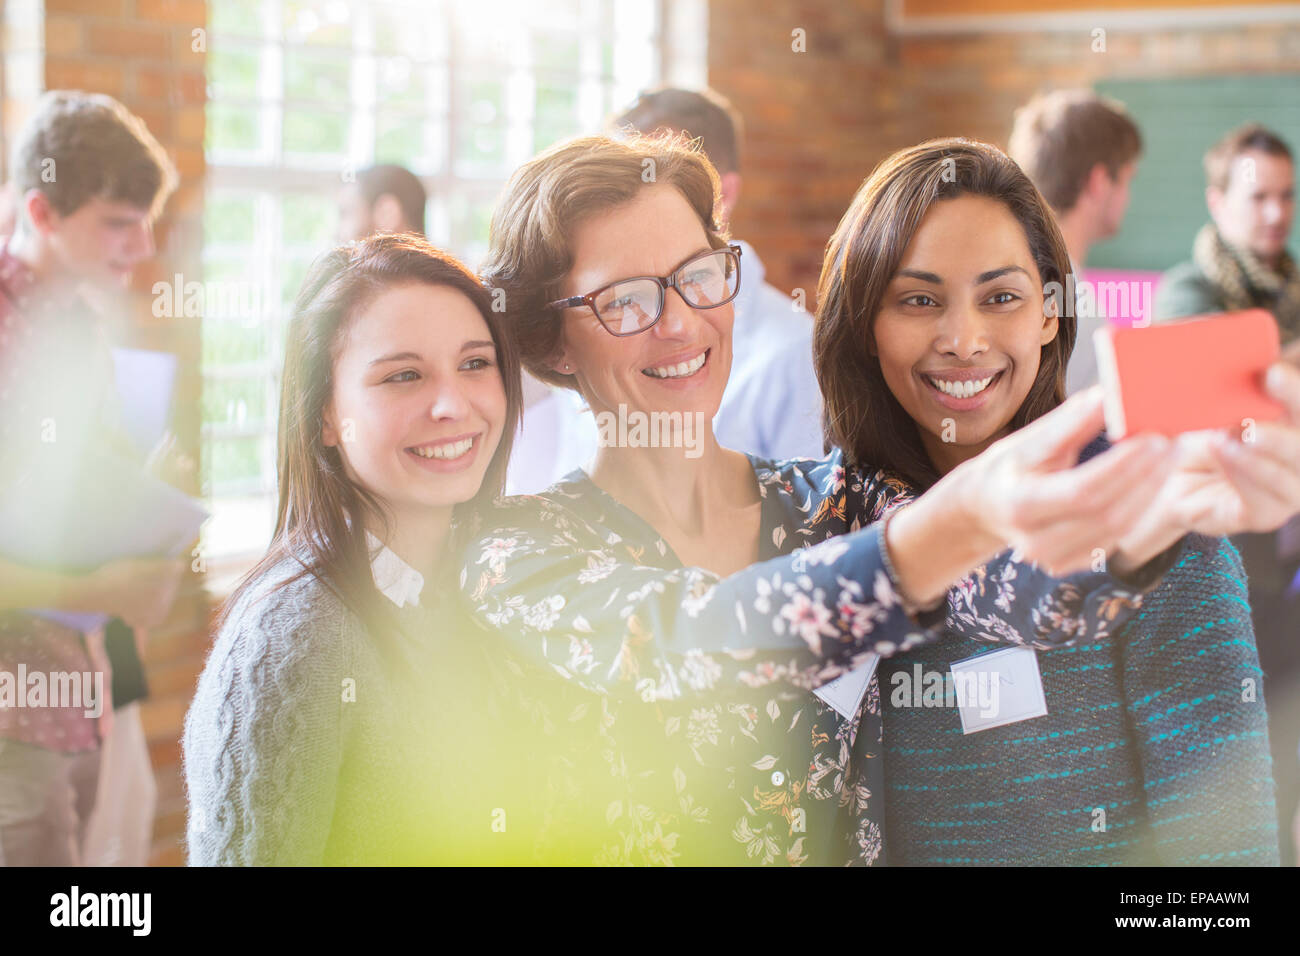 woman selfie camera phone Community center Stock Photo